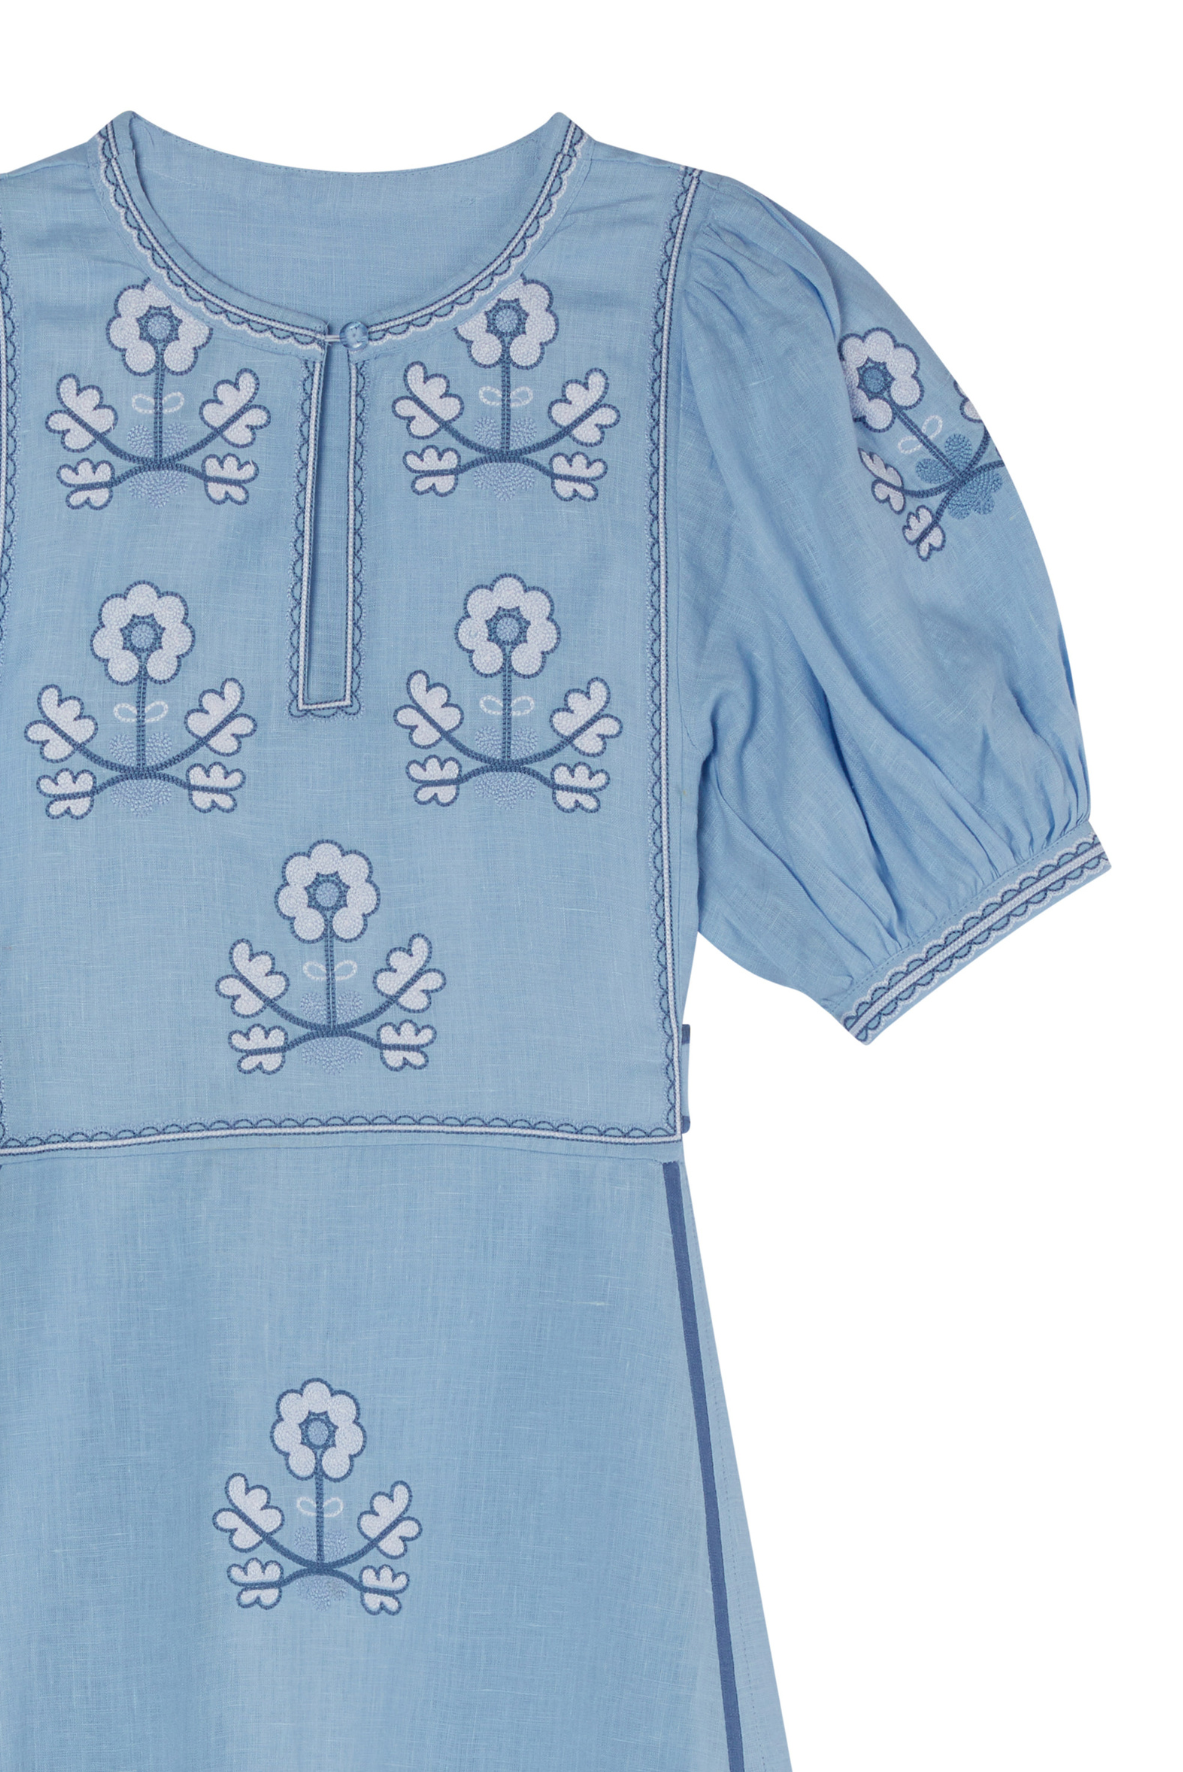 Lillie Ukrainian Embroidered Dress - Wheat, White